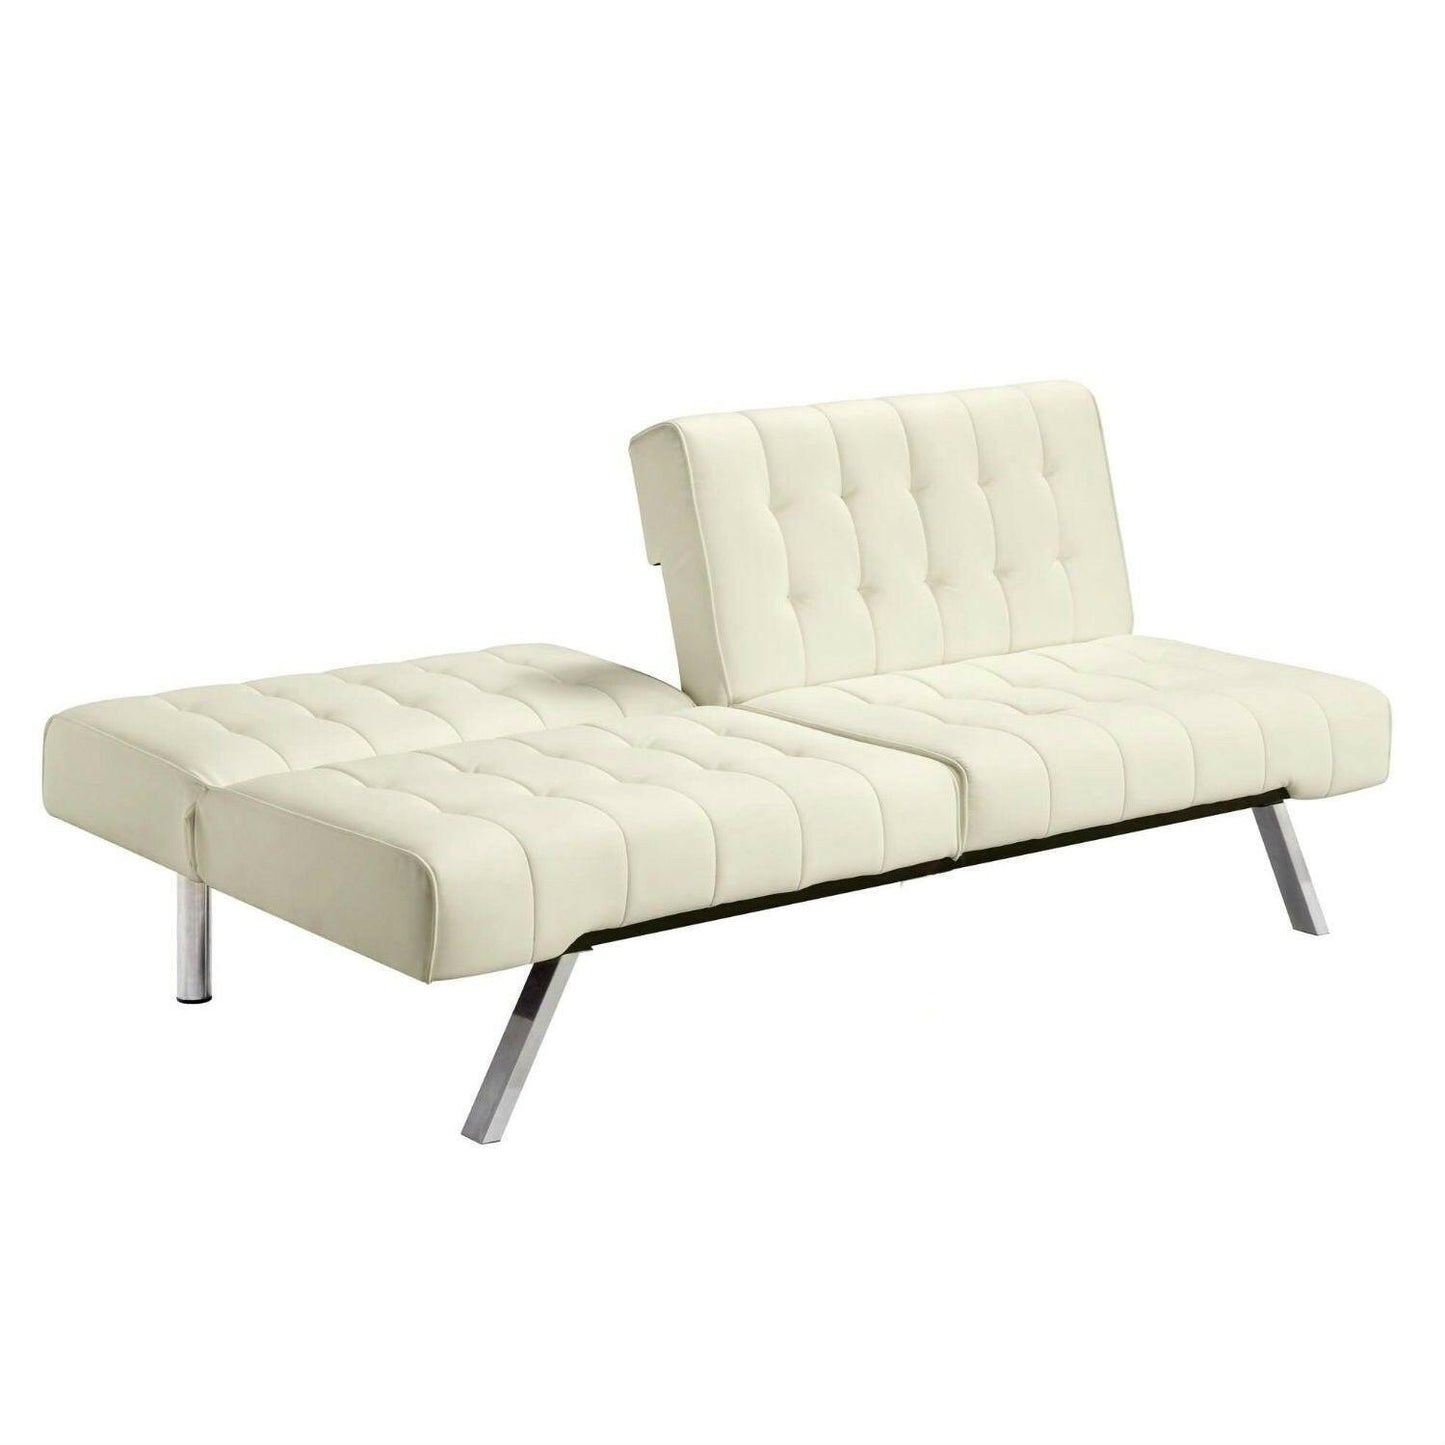 Split-back Modern Futon Style Sleeper Sofa Bed in Vanilla Faux Leather - FurniFindUSA